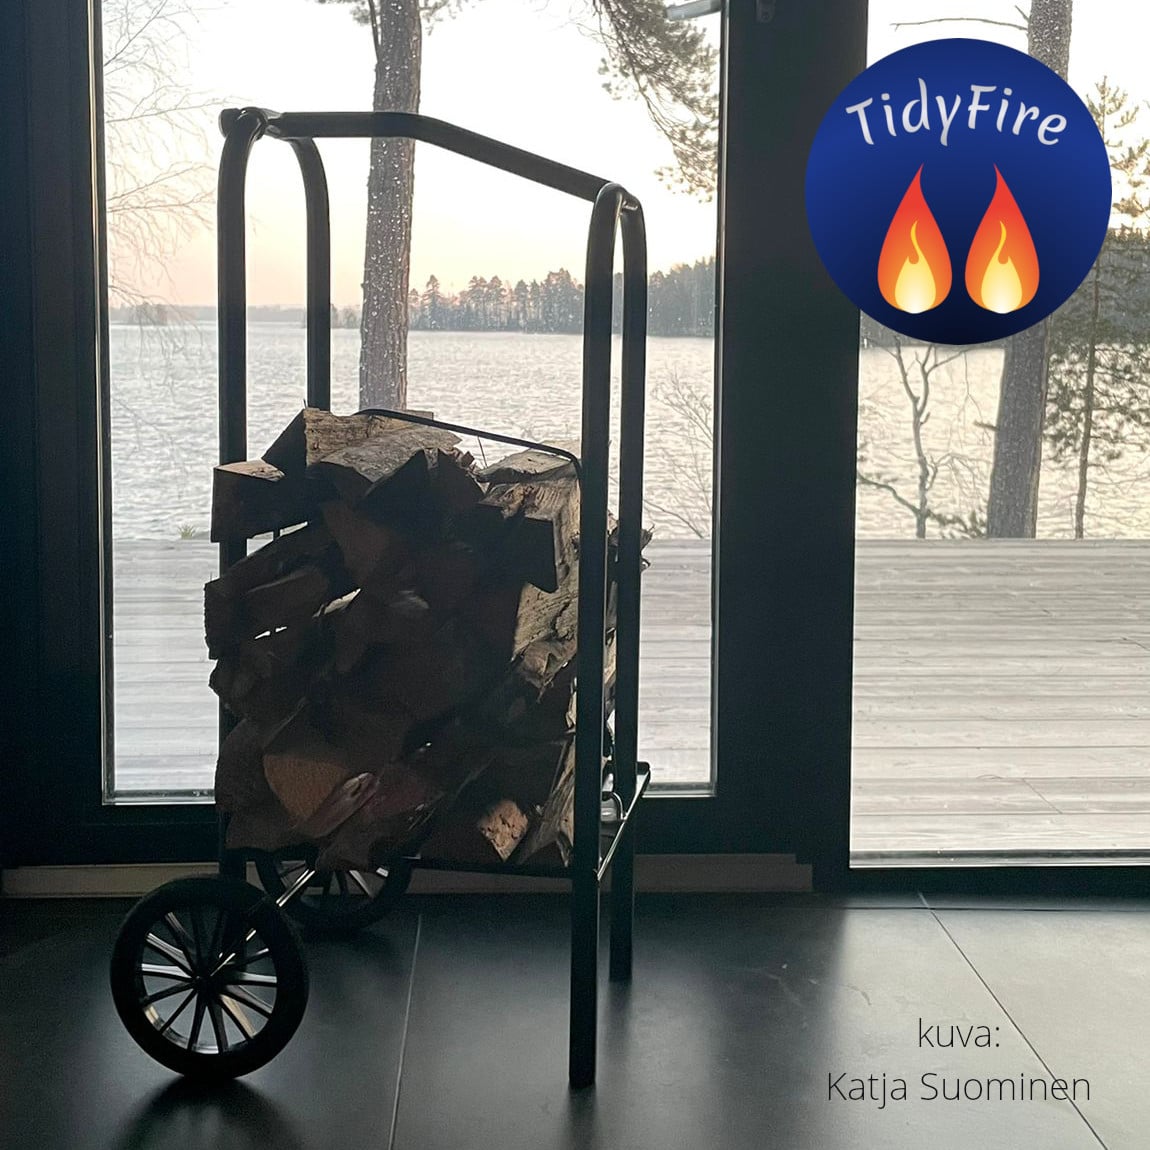 TidyFire WoodCart - RAPUT KULKEVA KLAPITELINE - malli Jalo